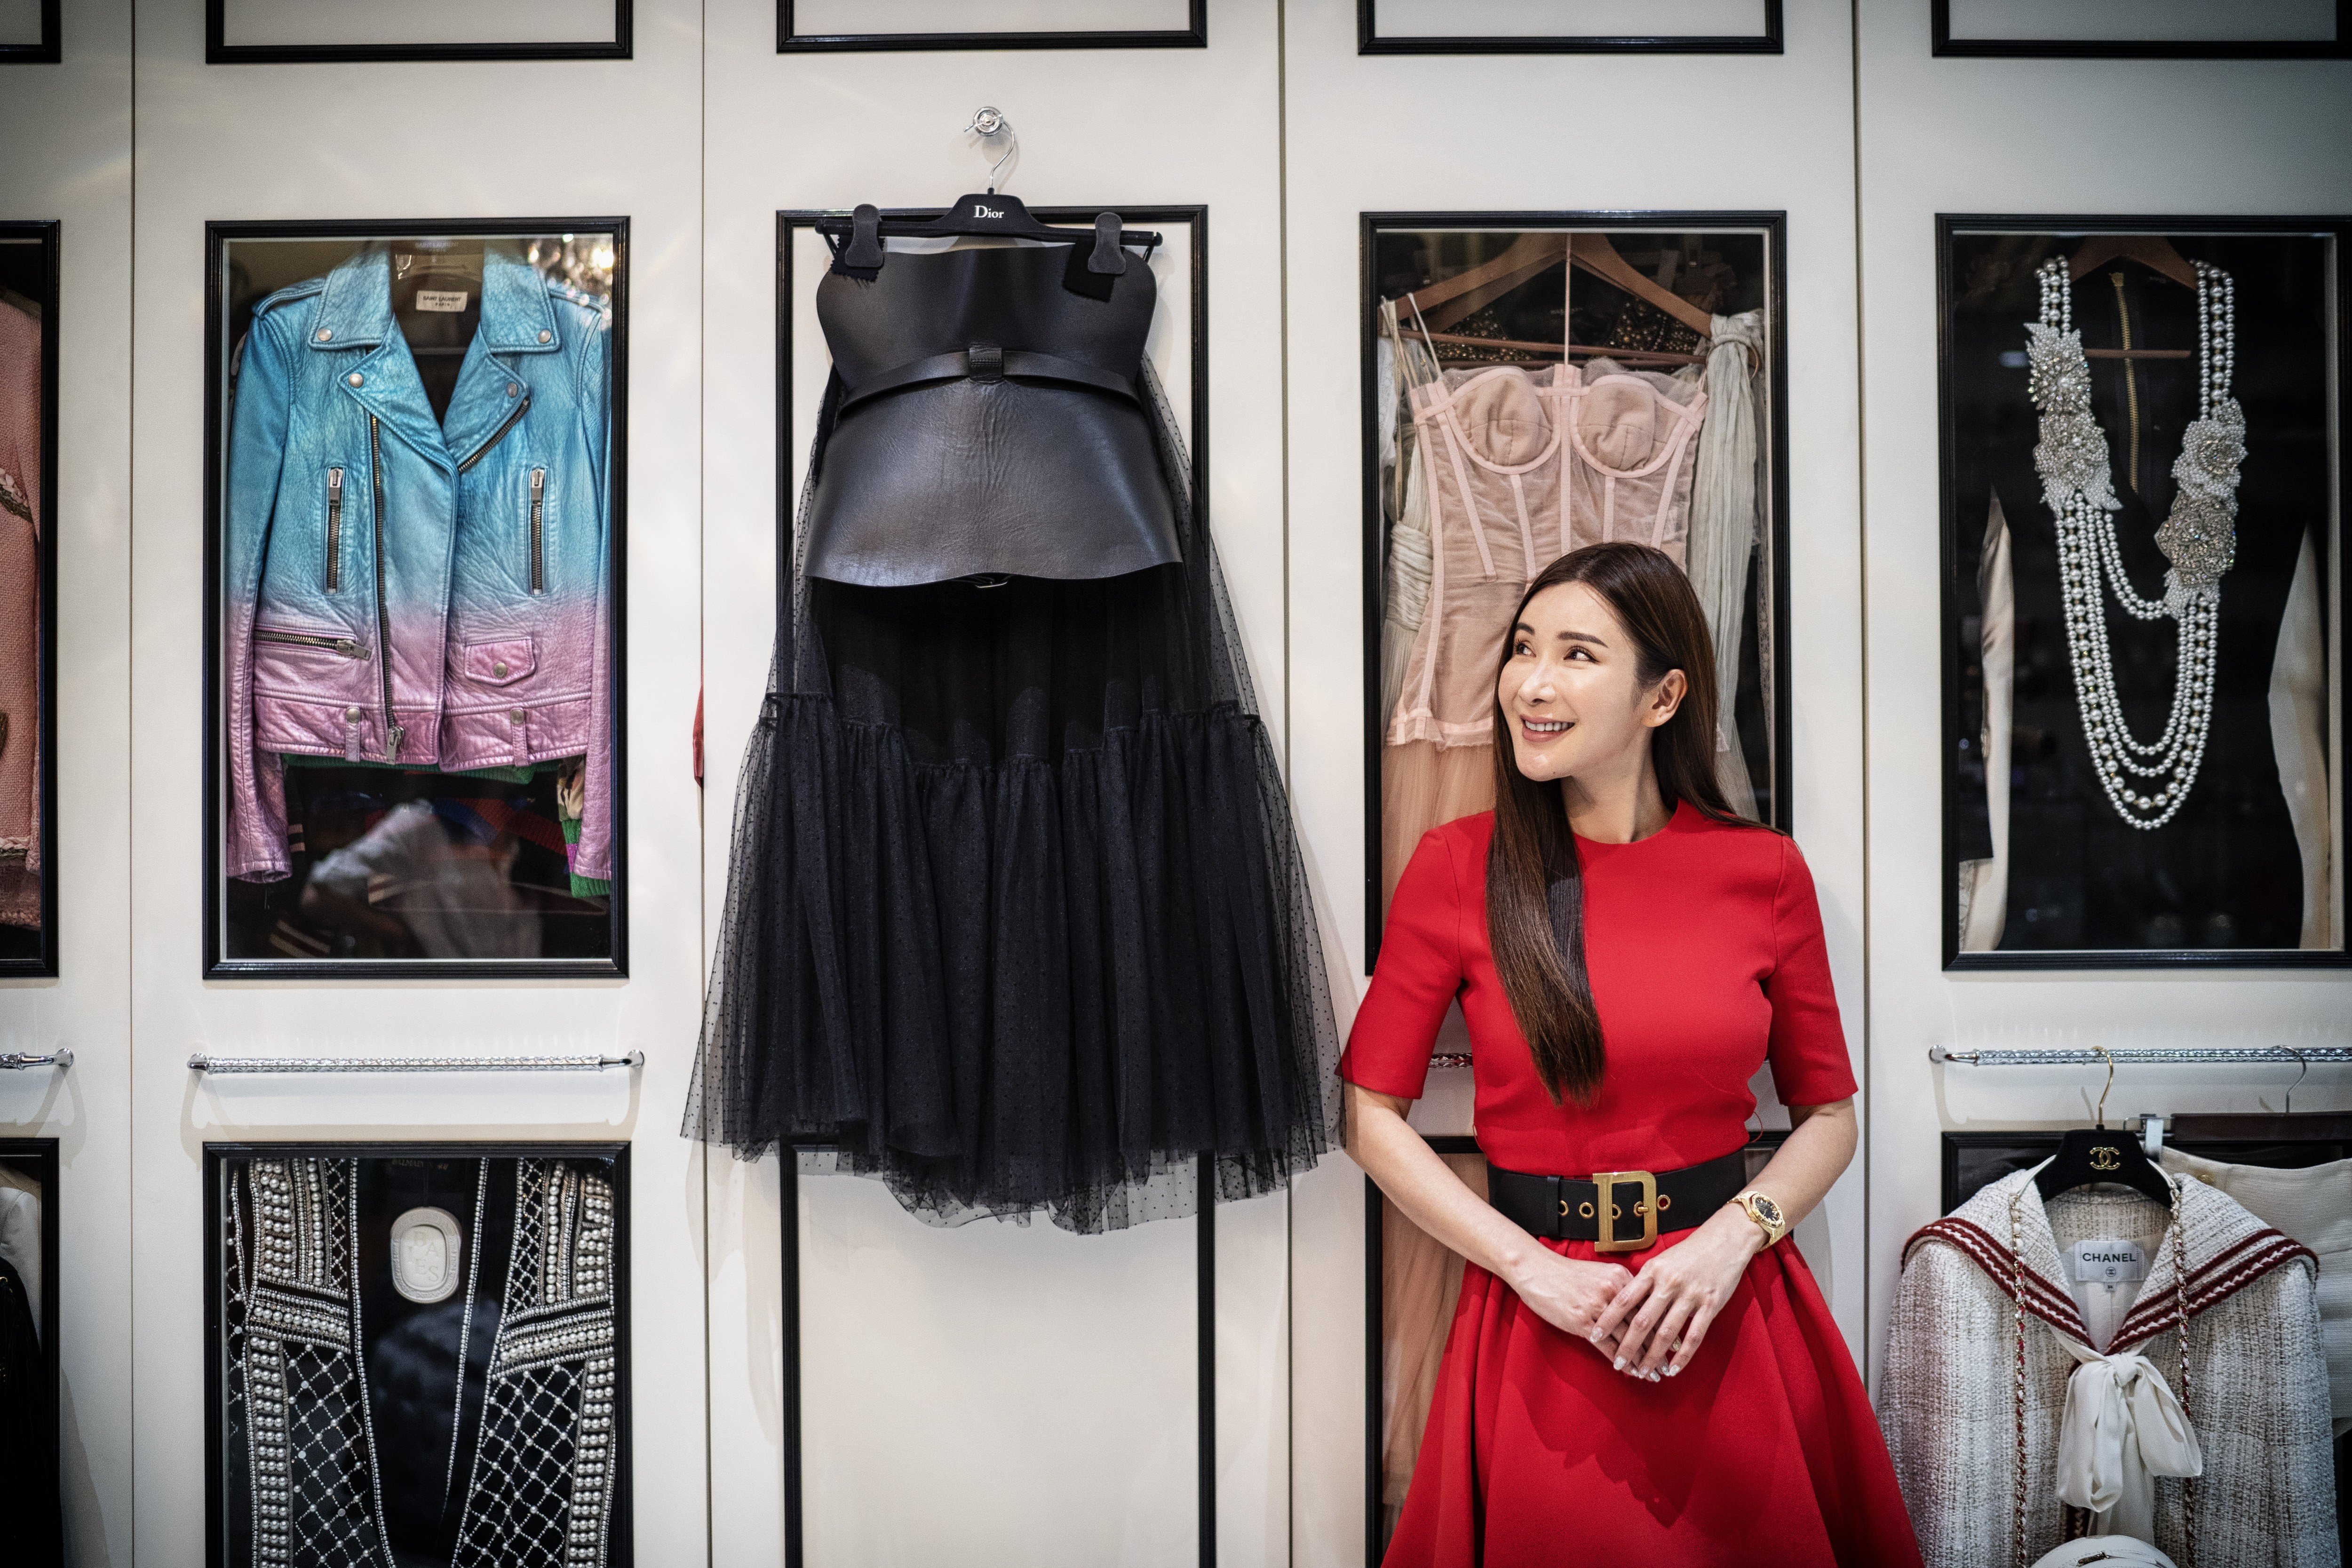 Hermès So Black Birkin Sets Auction Record at Christie's Hong Kong